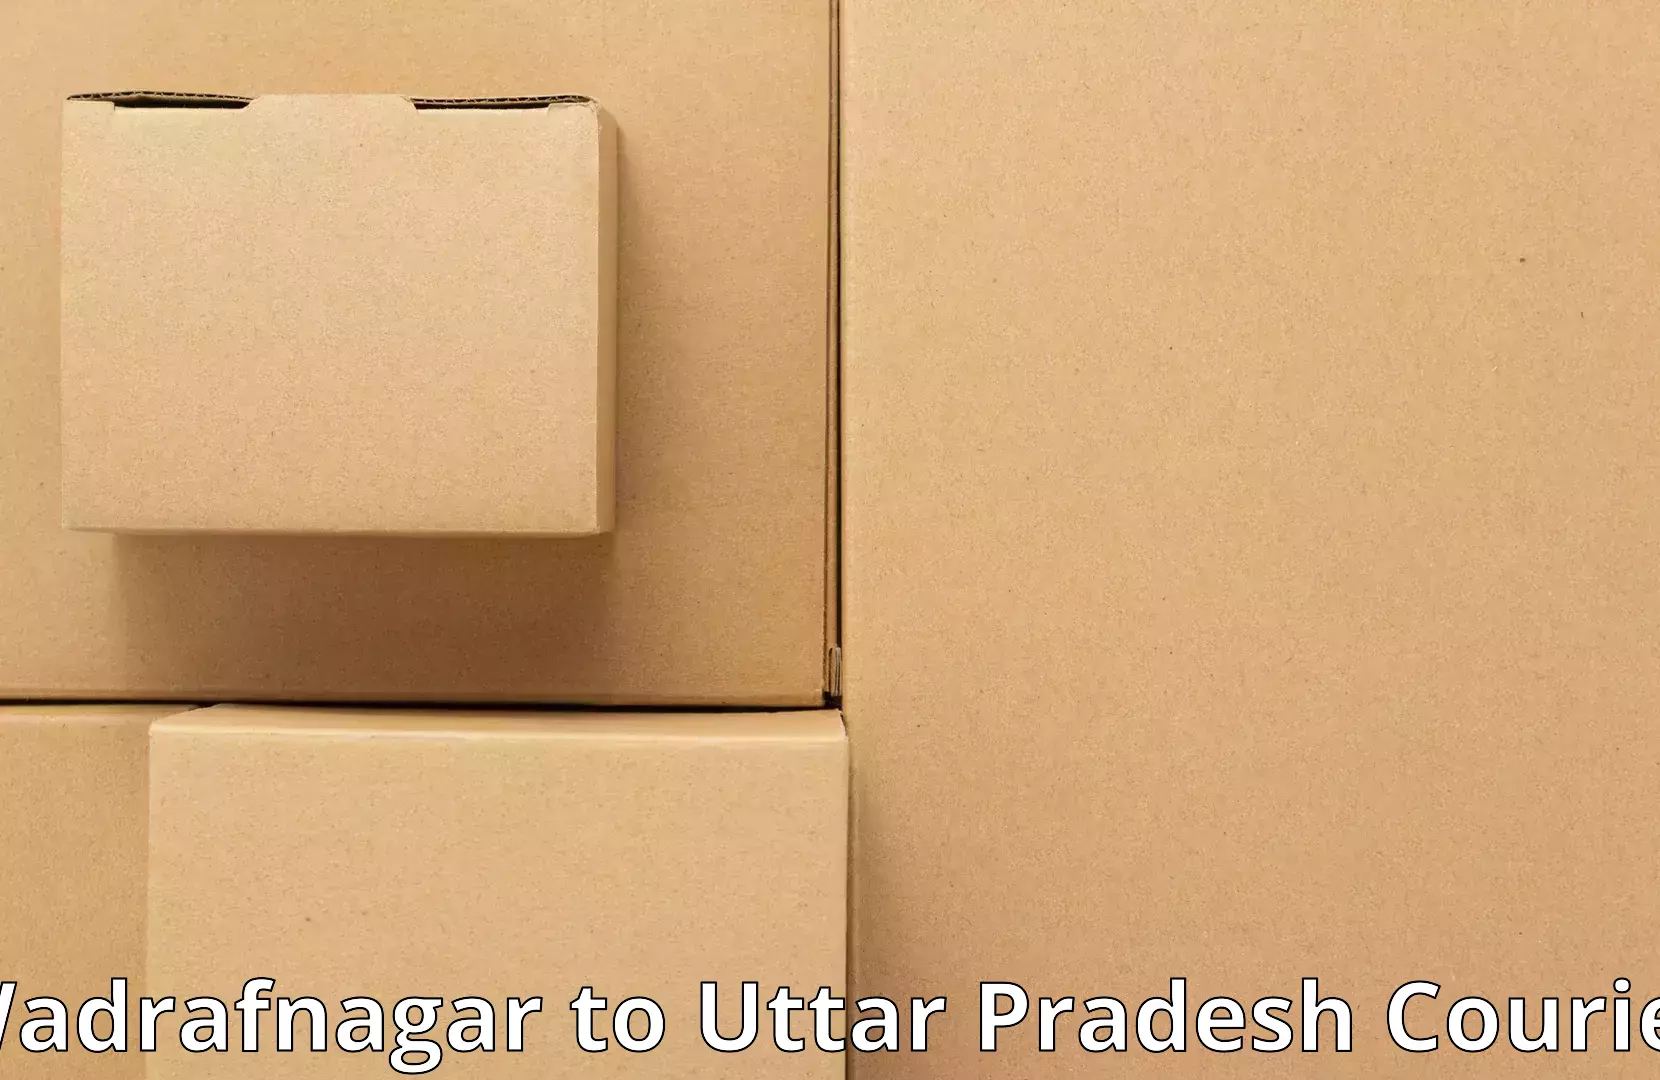 Budget-friendly movers Wadrafnagar to Lalitpur